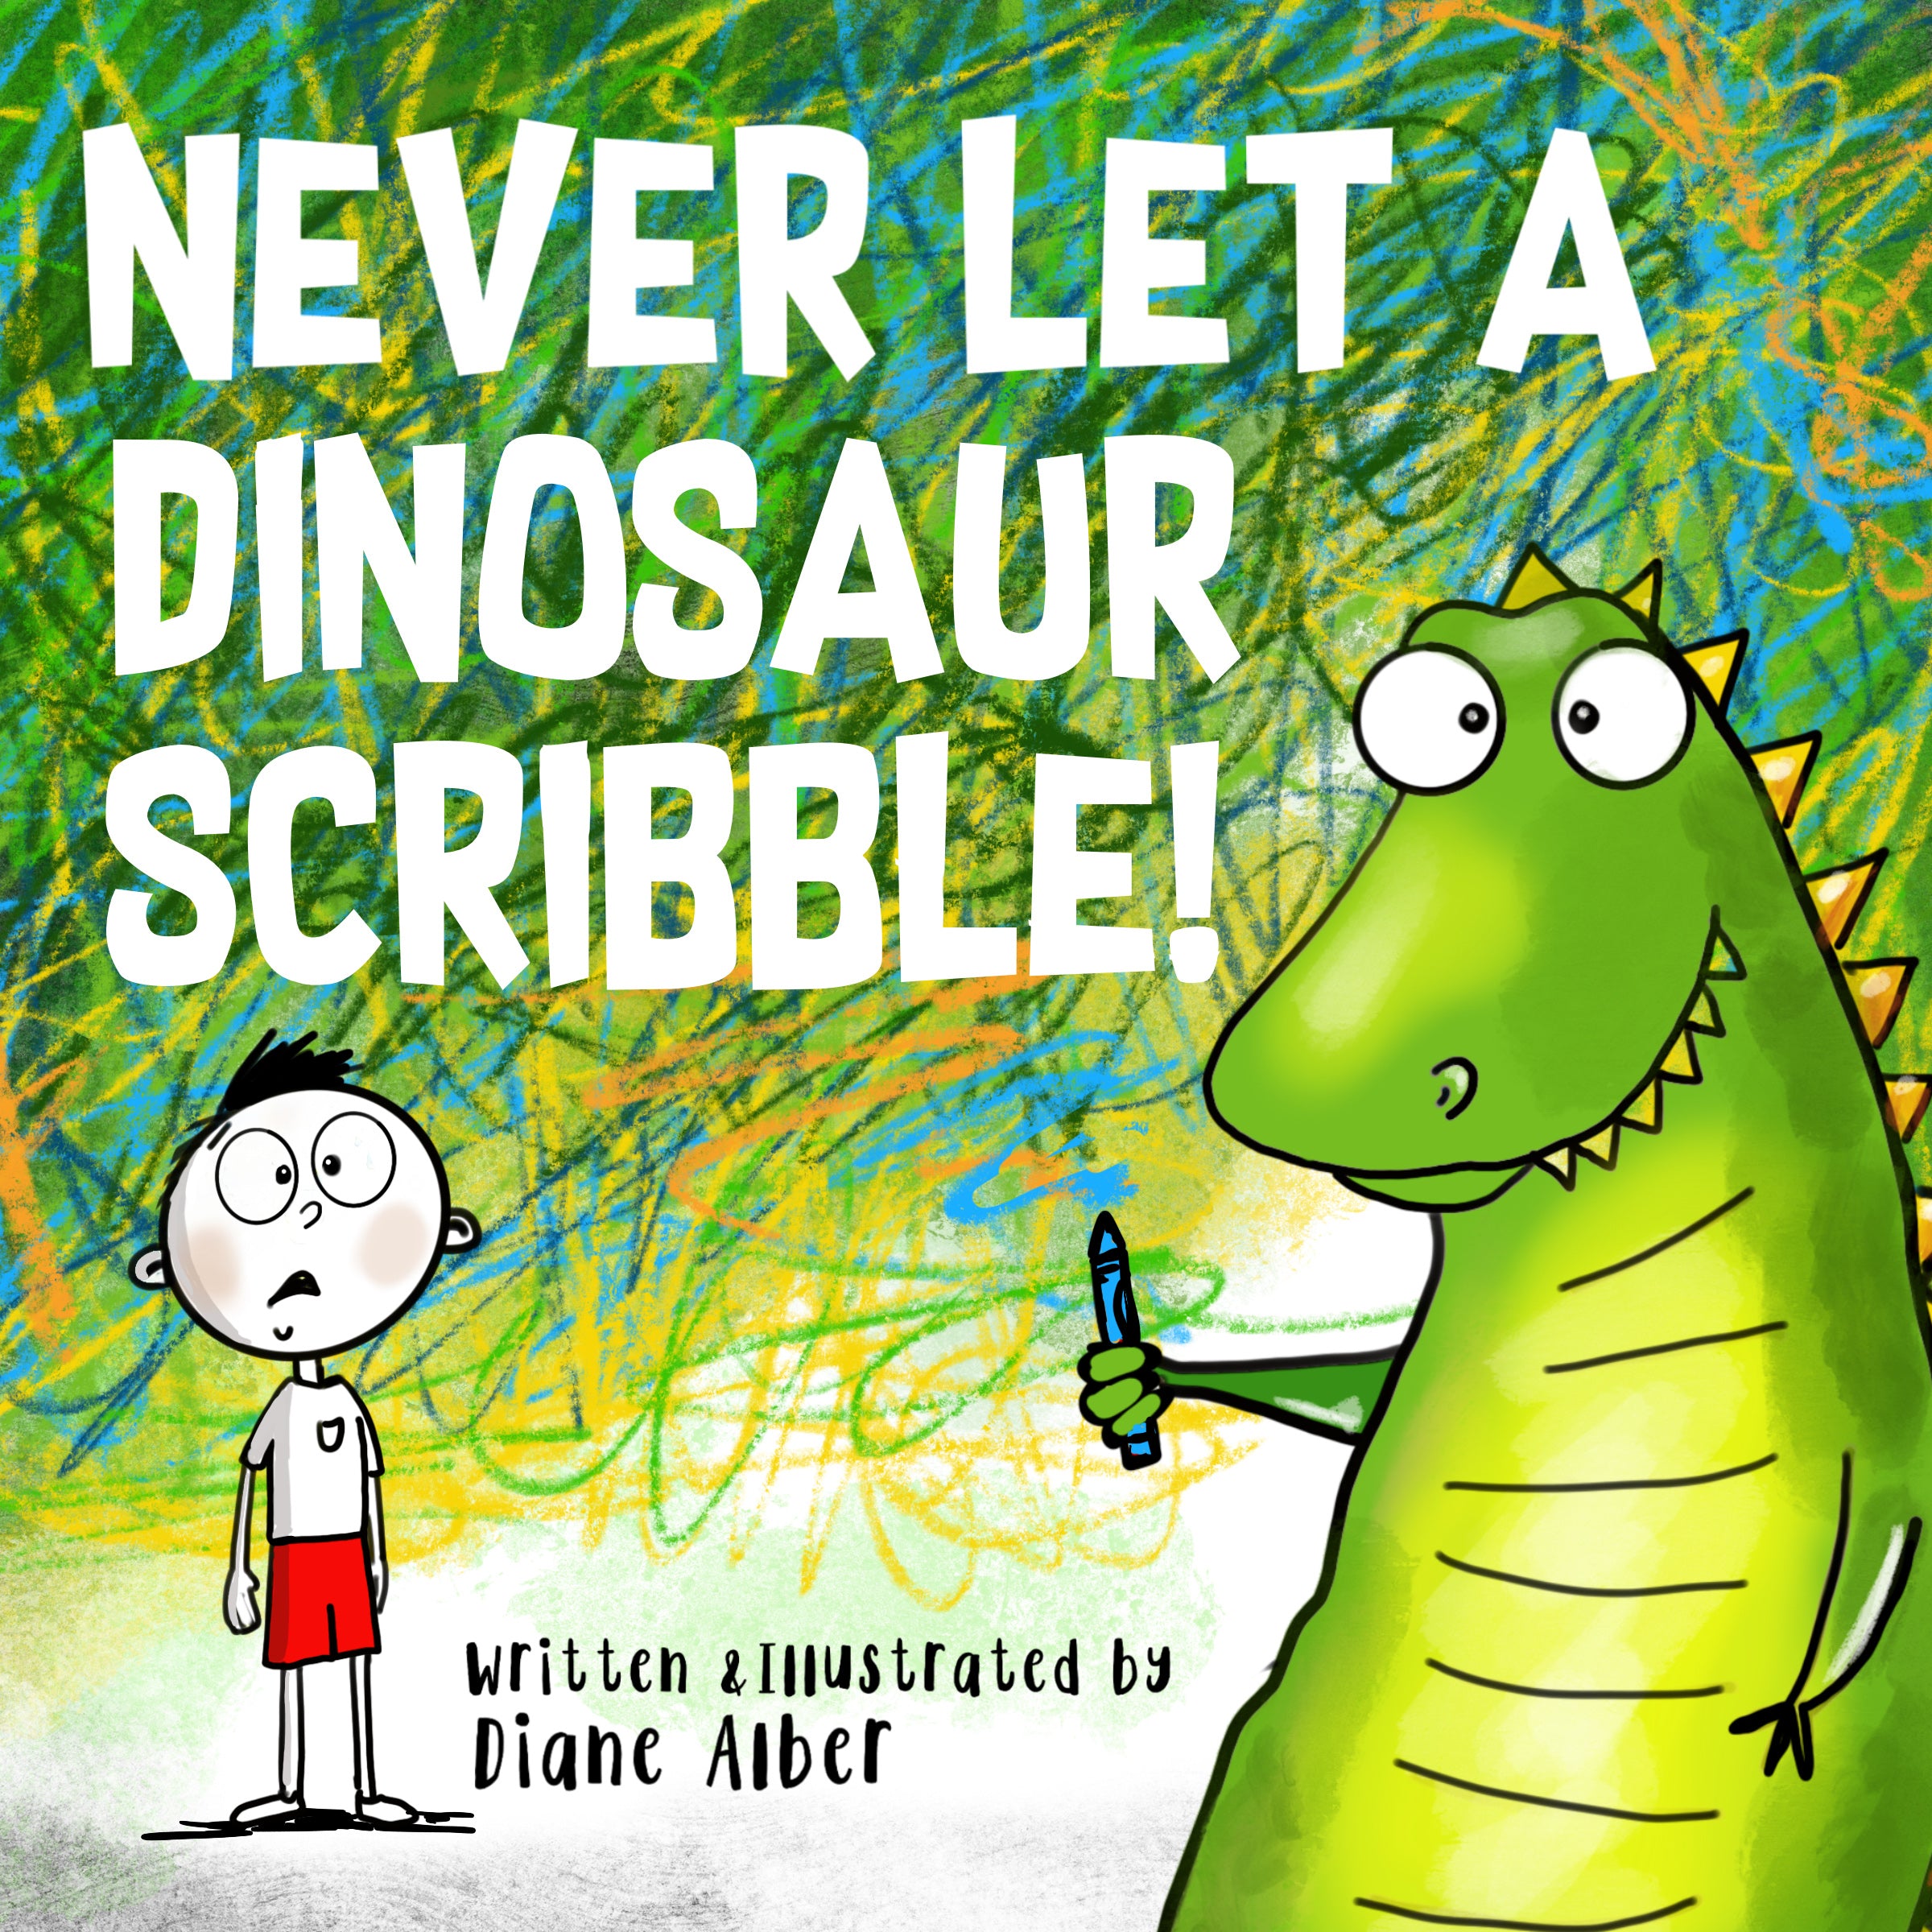 Scribble!　Dinosaur　Diane　Let　Never　–　A　Alber